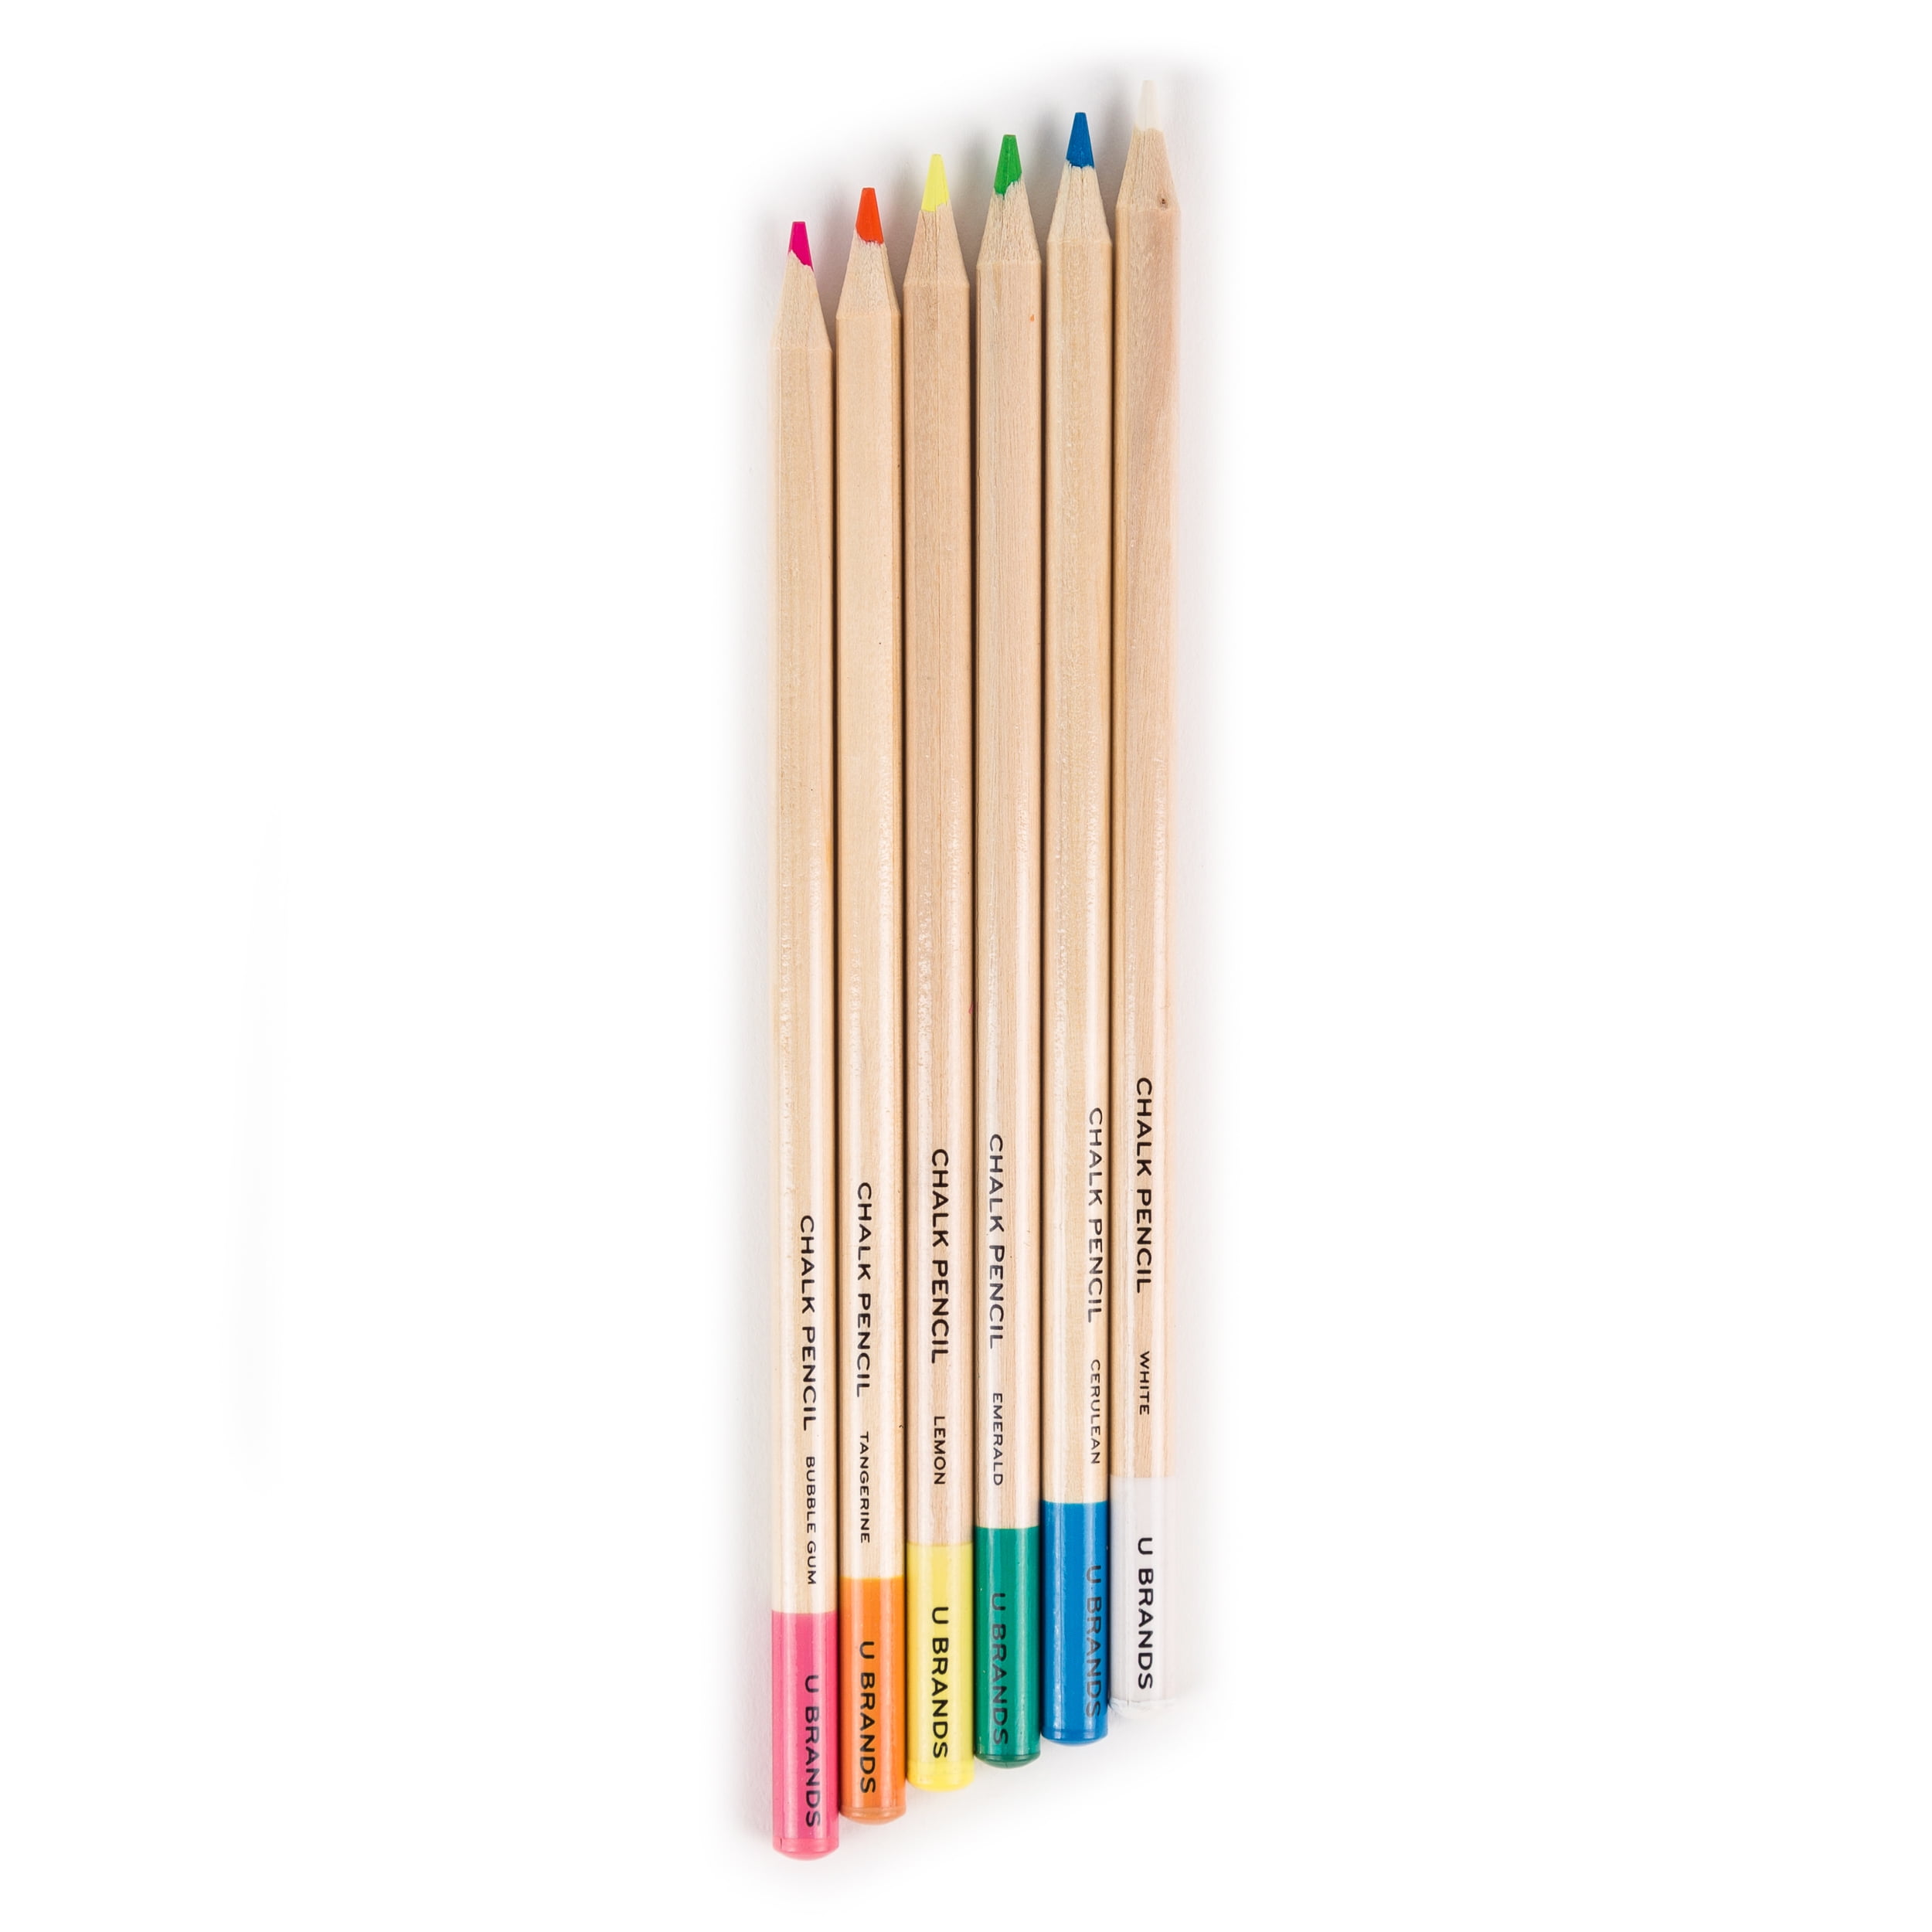  U Brands Chalkboard Colored Pencils, Assorted Colors, 6-Count